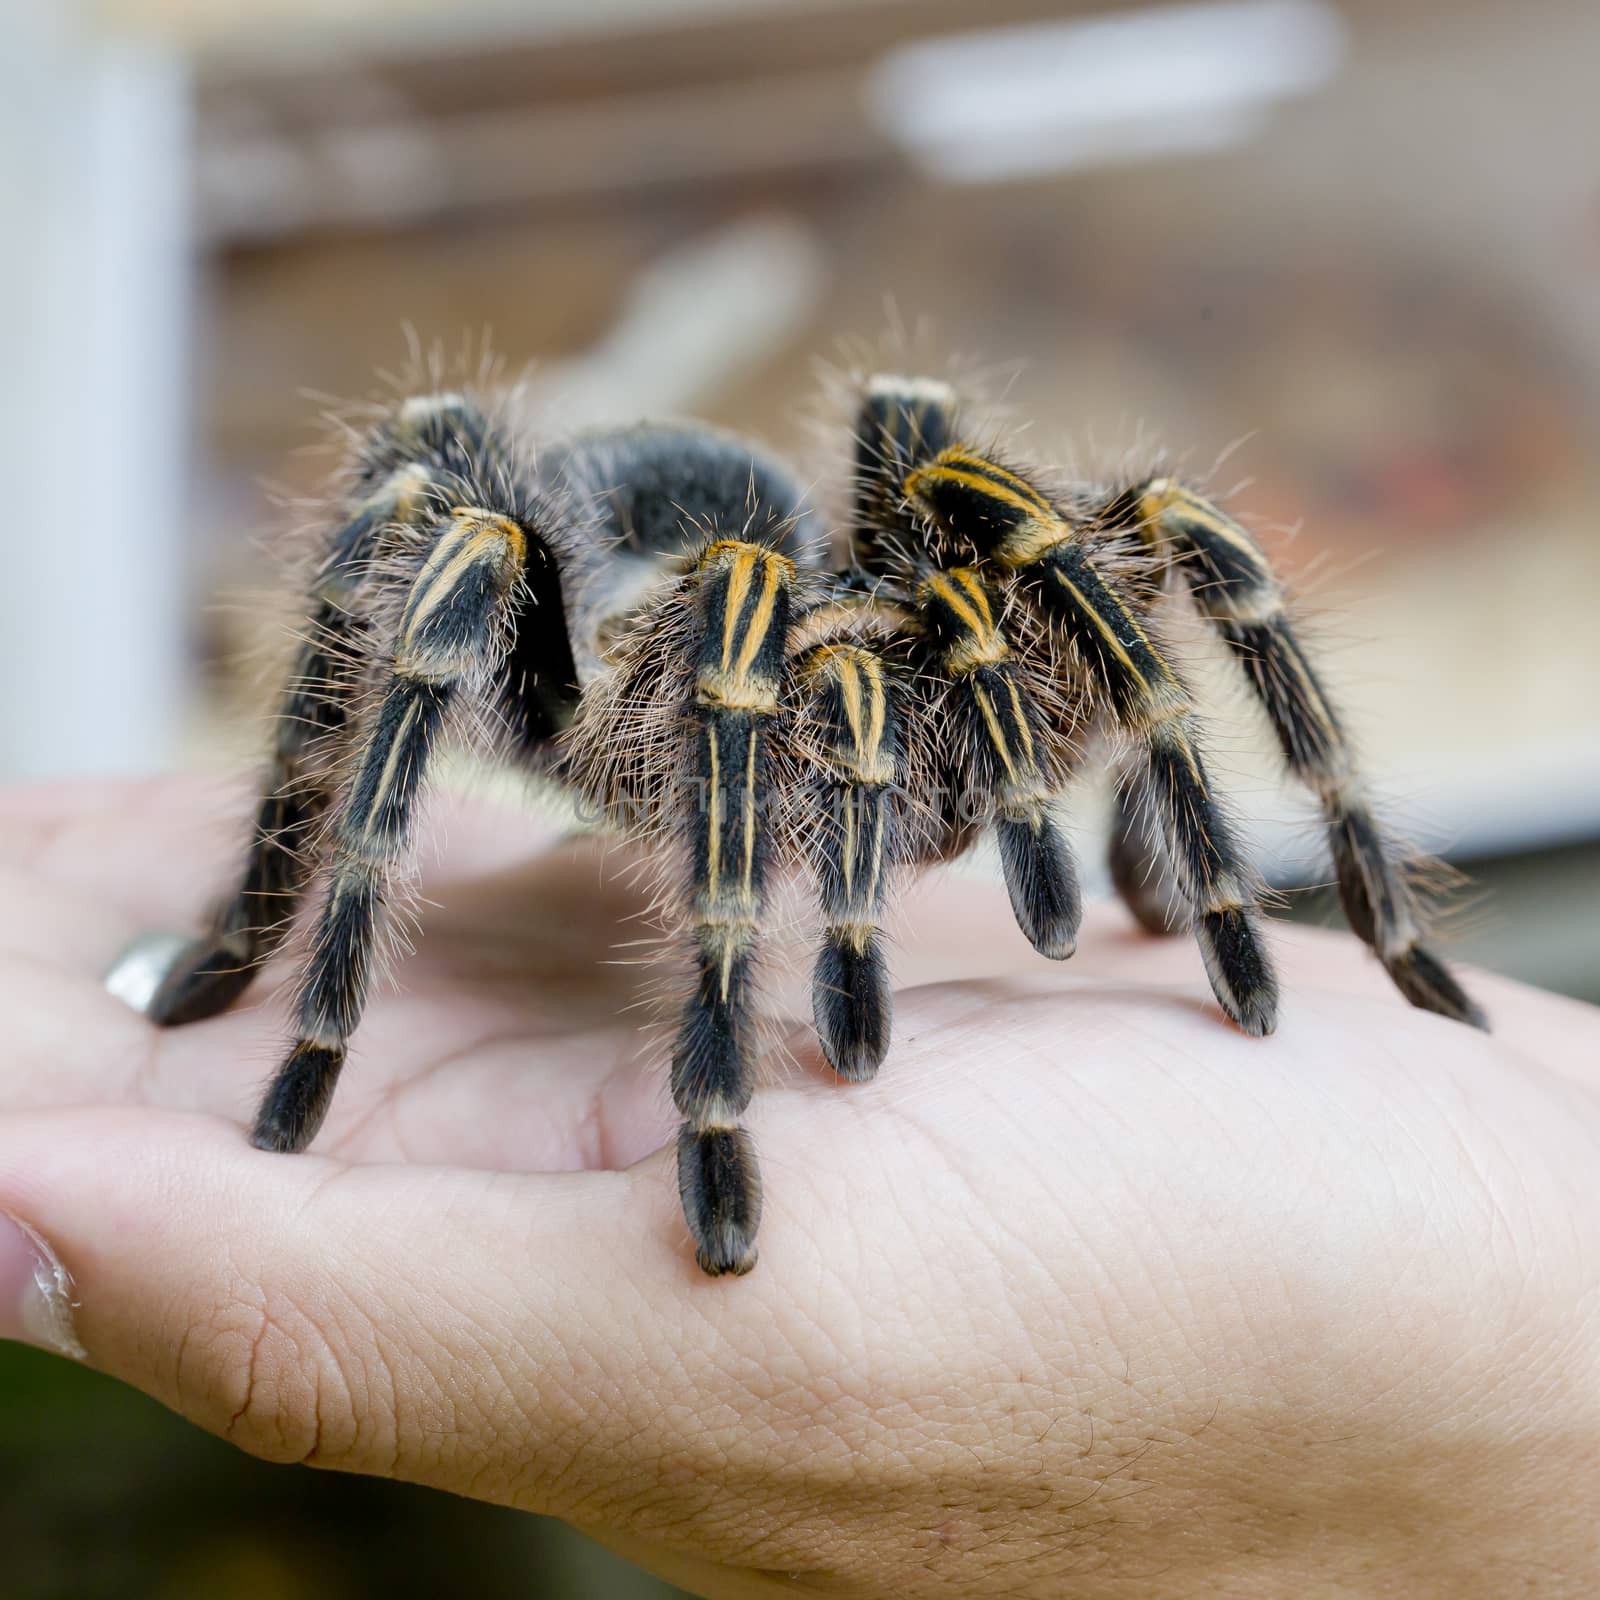 Mexican redknee tarantula (Brachypelma smithi), spider female in human hand